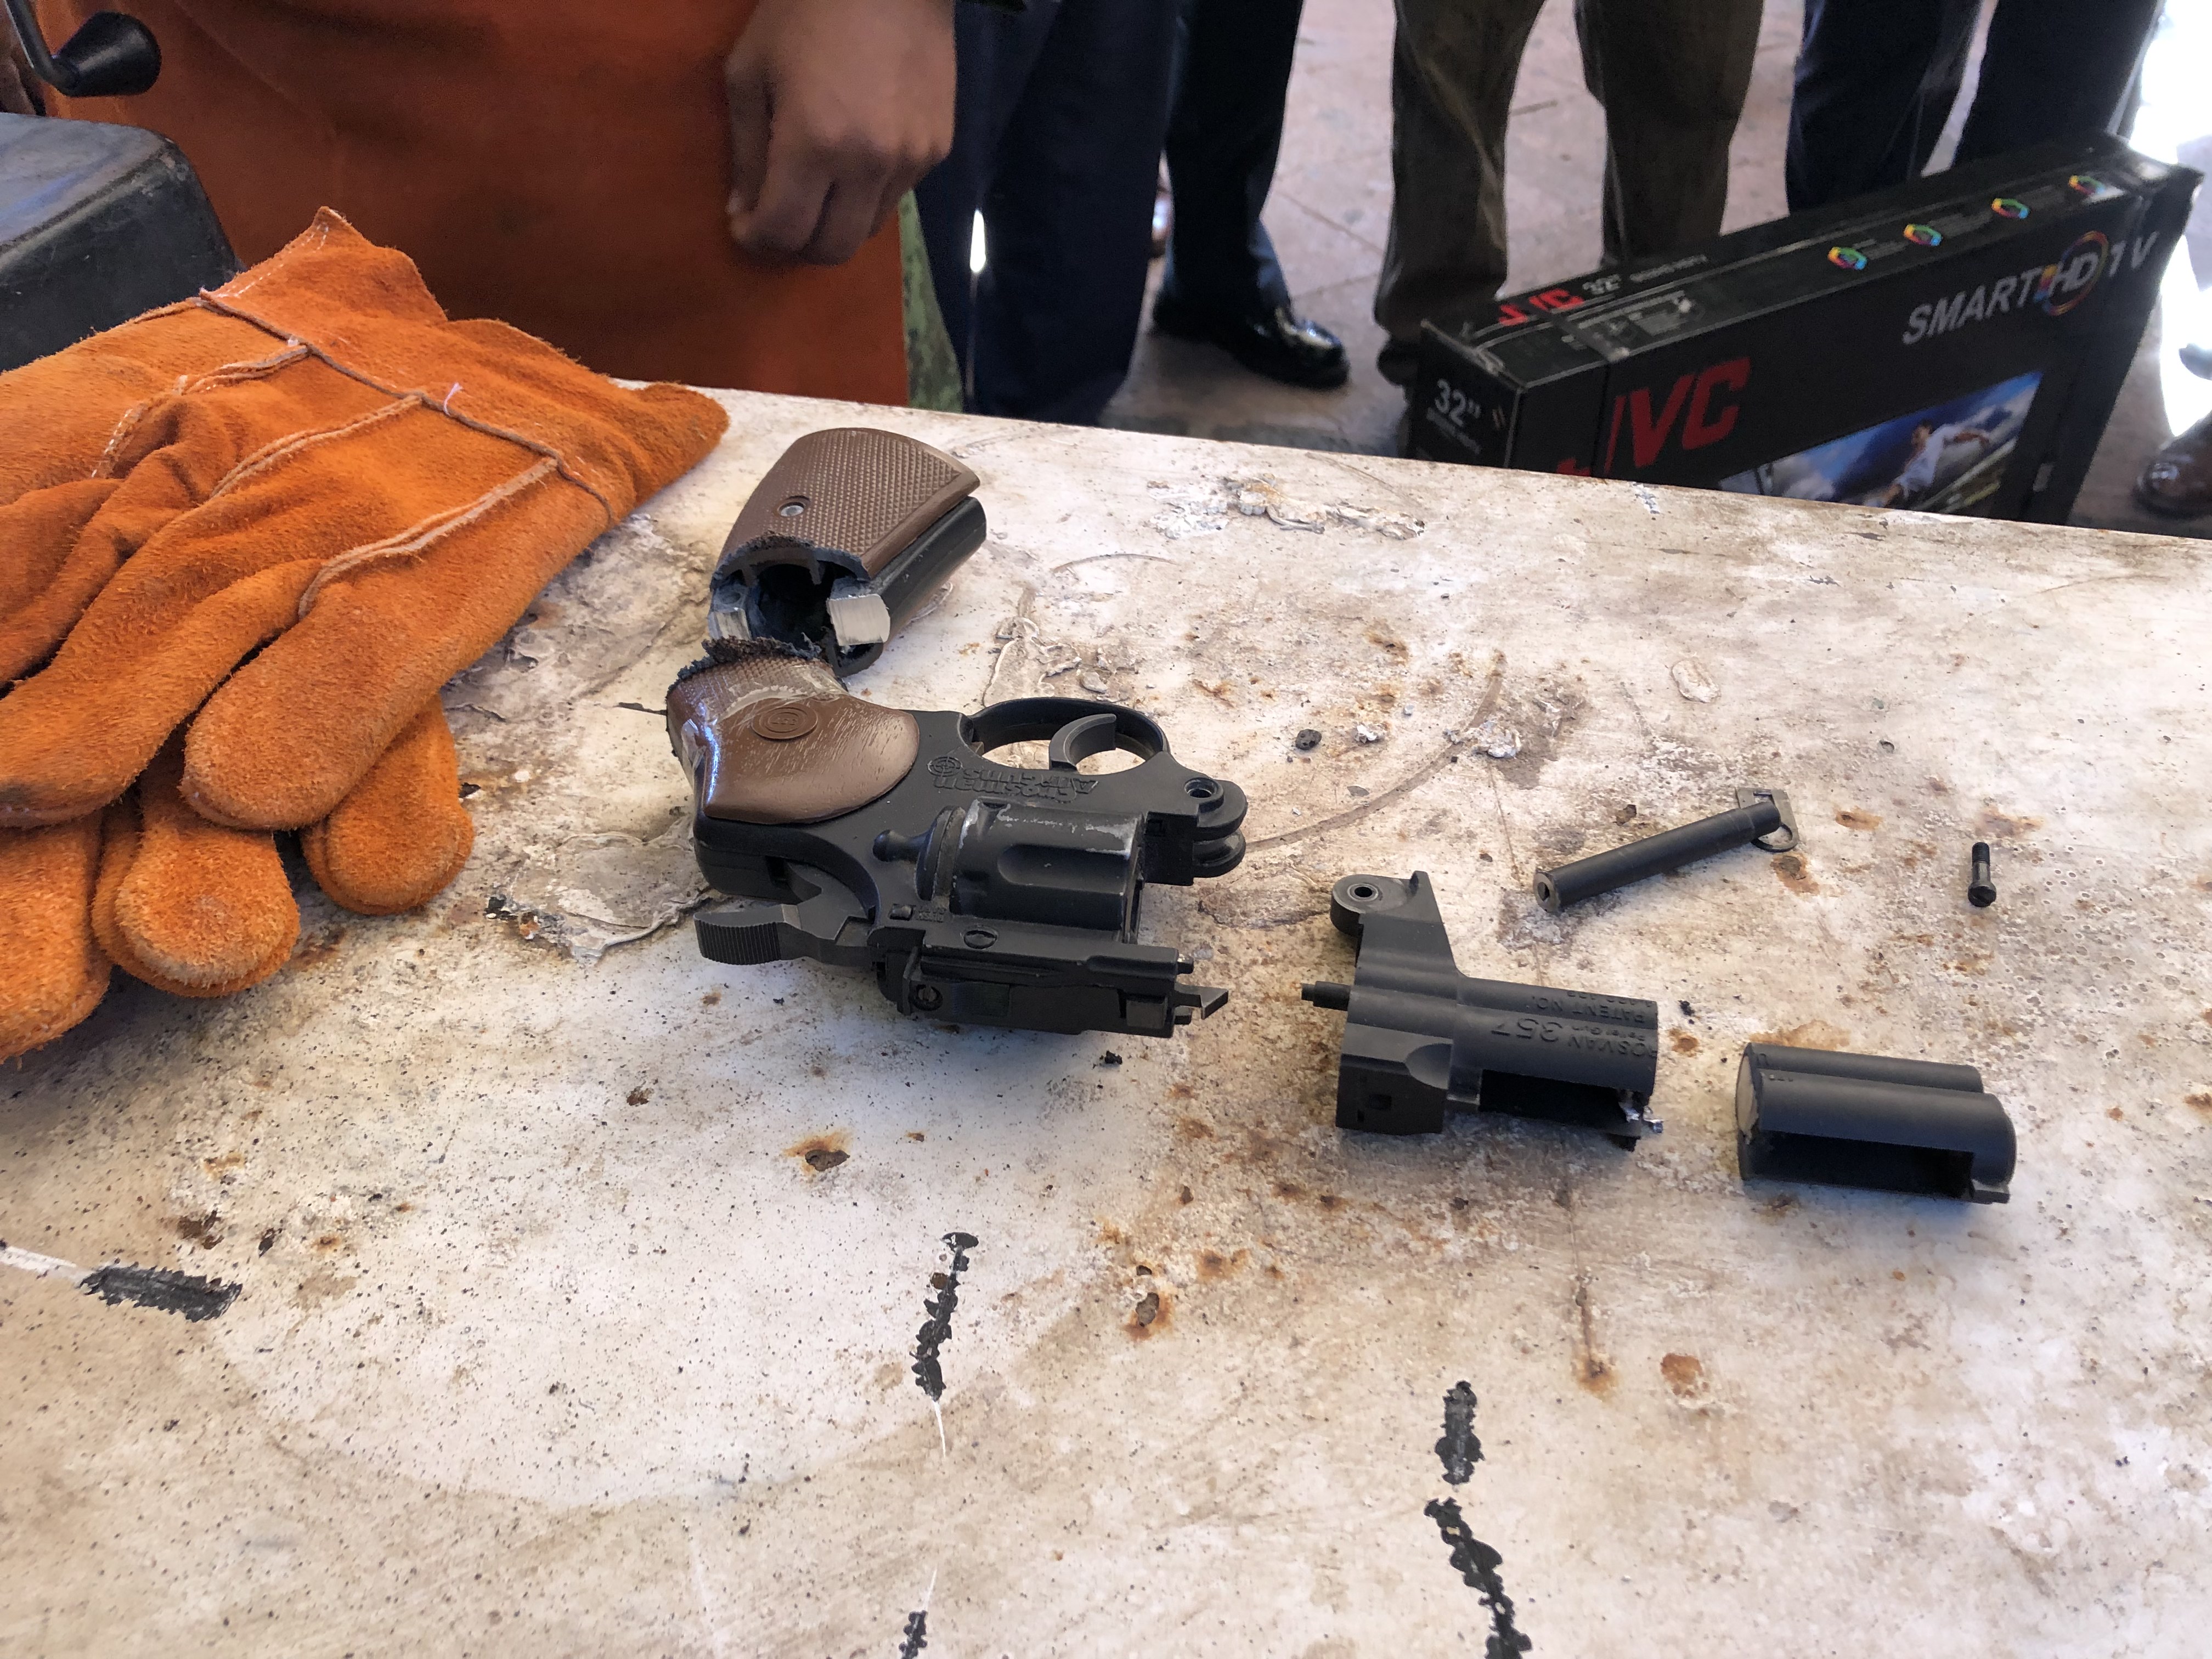  Fijan fecha de audiencia sobre demanda de México a fabricantes de armas en EU